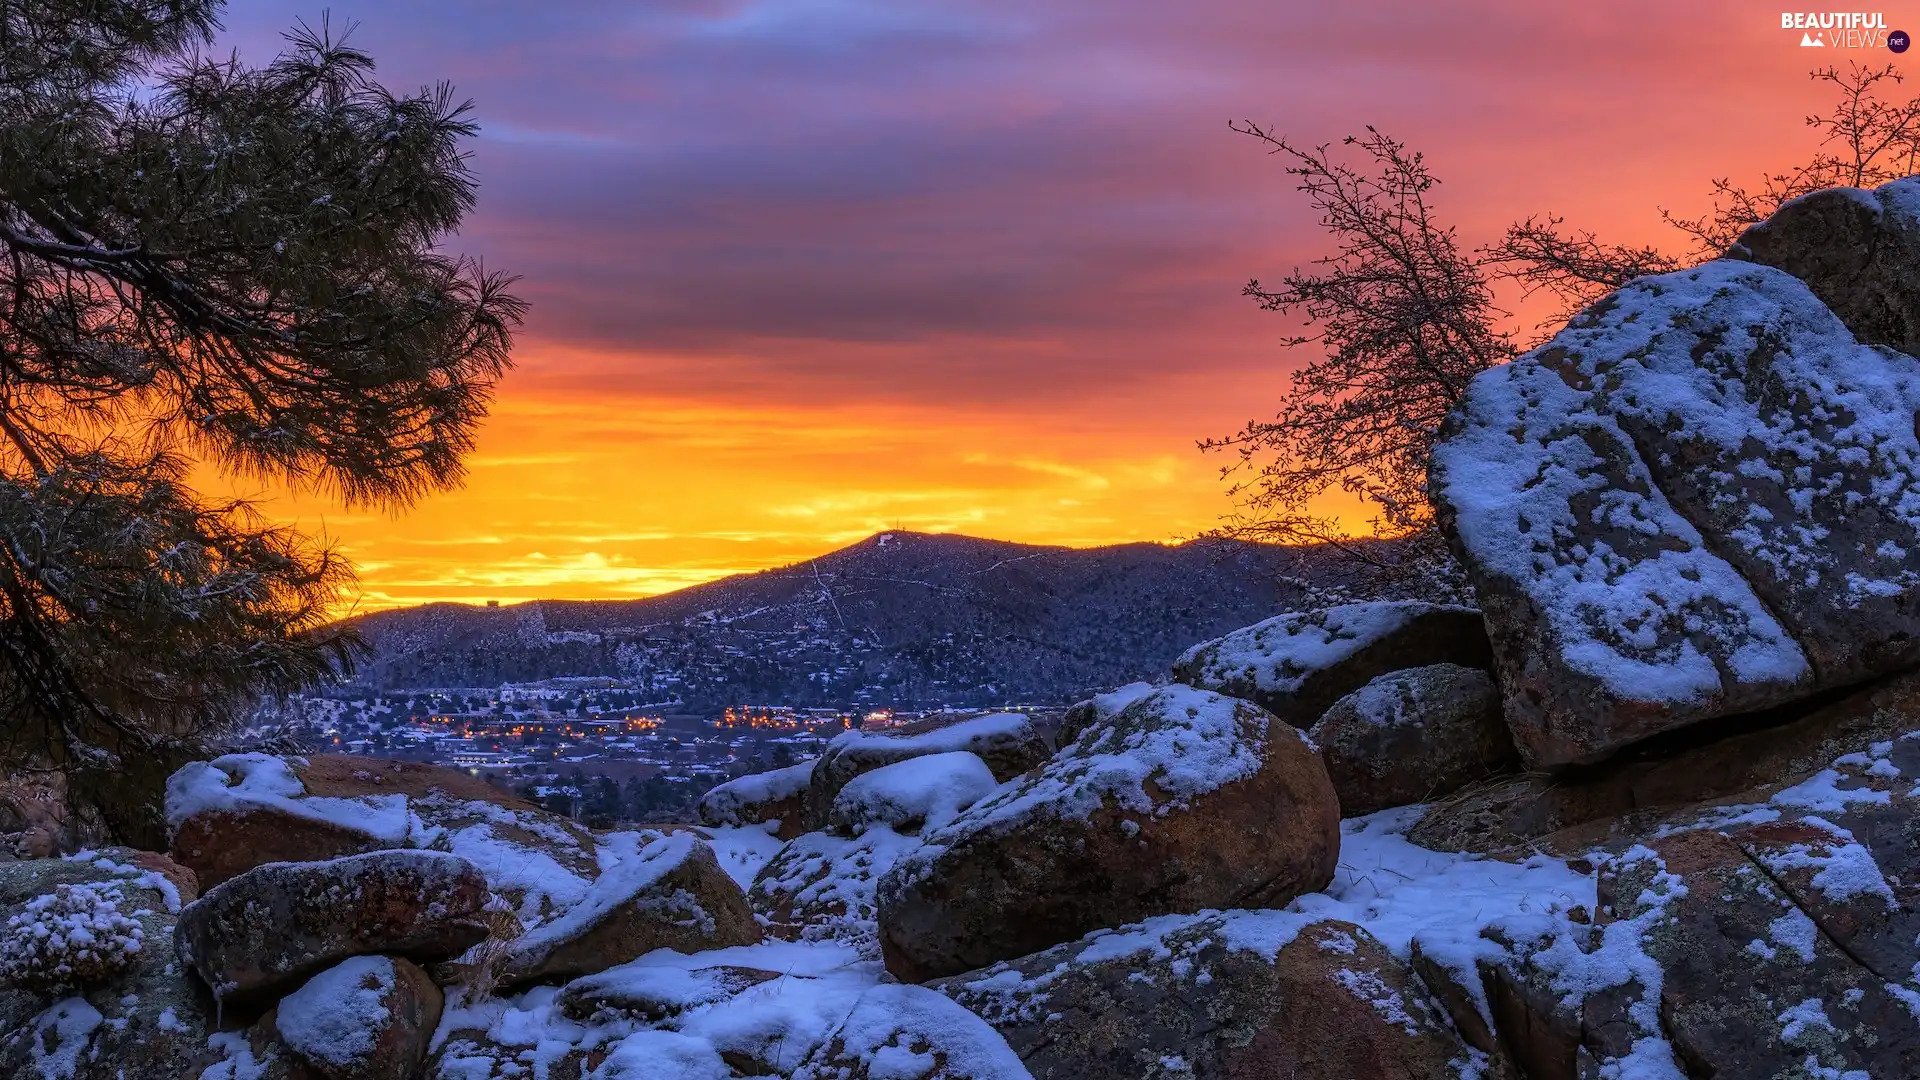 Prescott, Sunrise, Arizona, The United States, Stones, rocks, winter, Snowy, Mountains